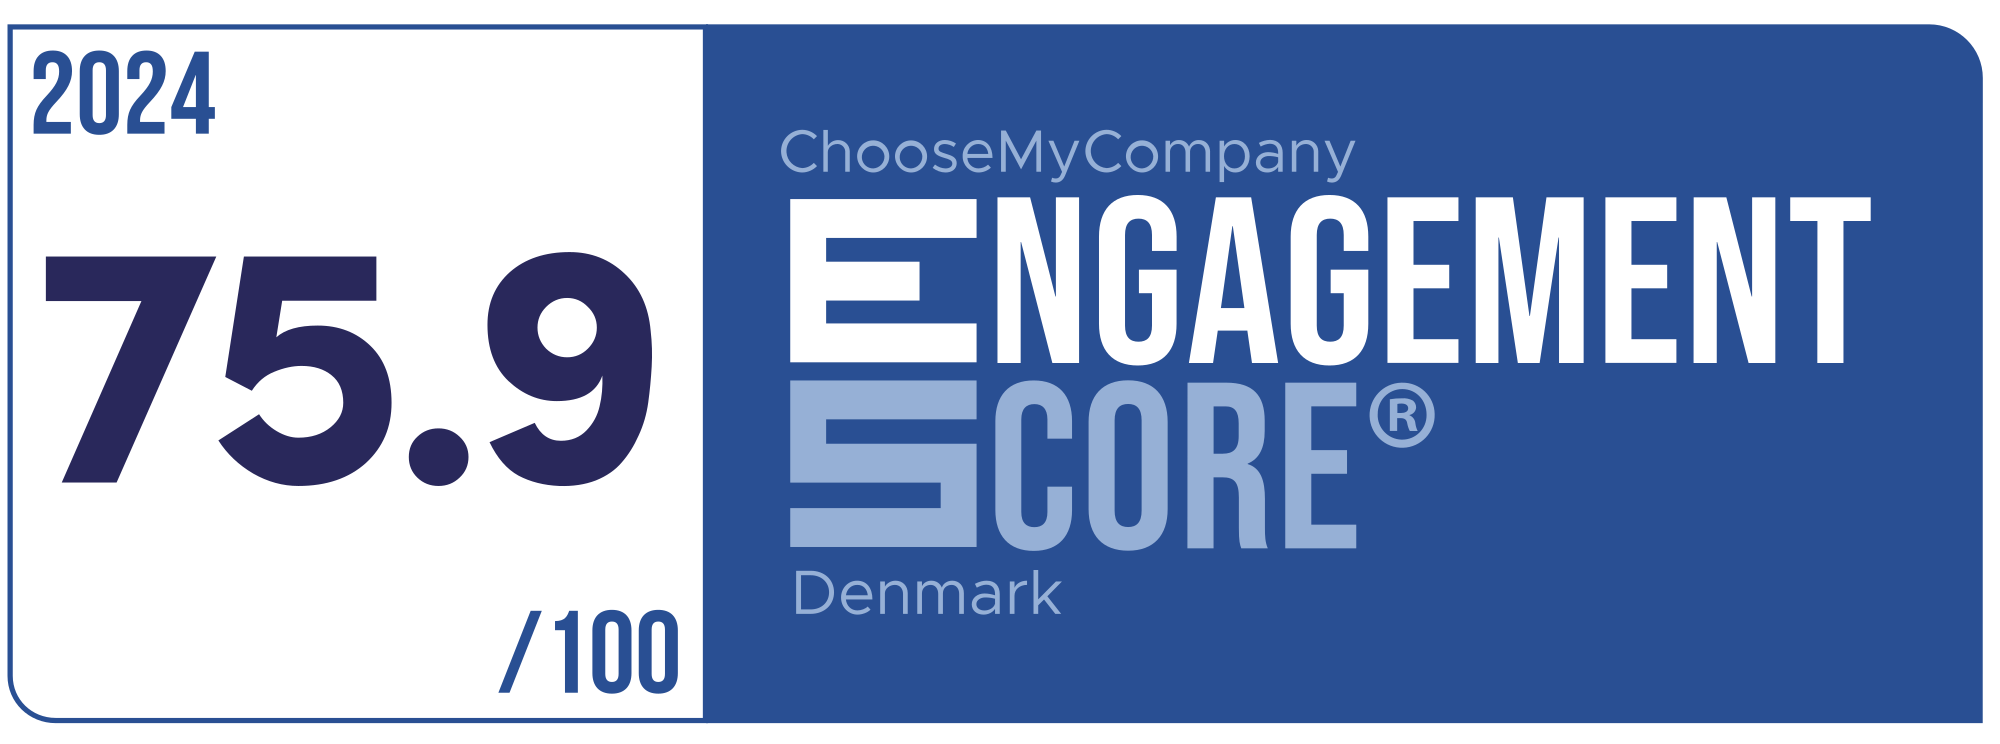 Label Engagement Score 2024 Denmark